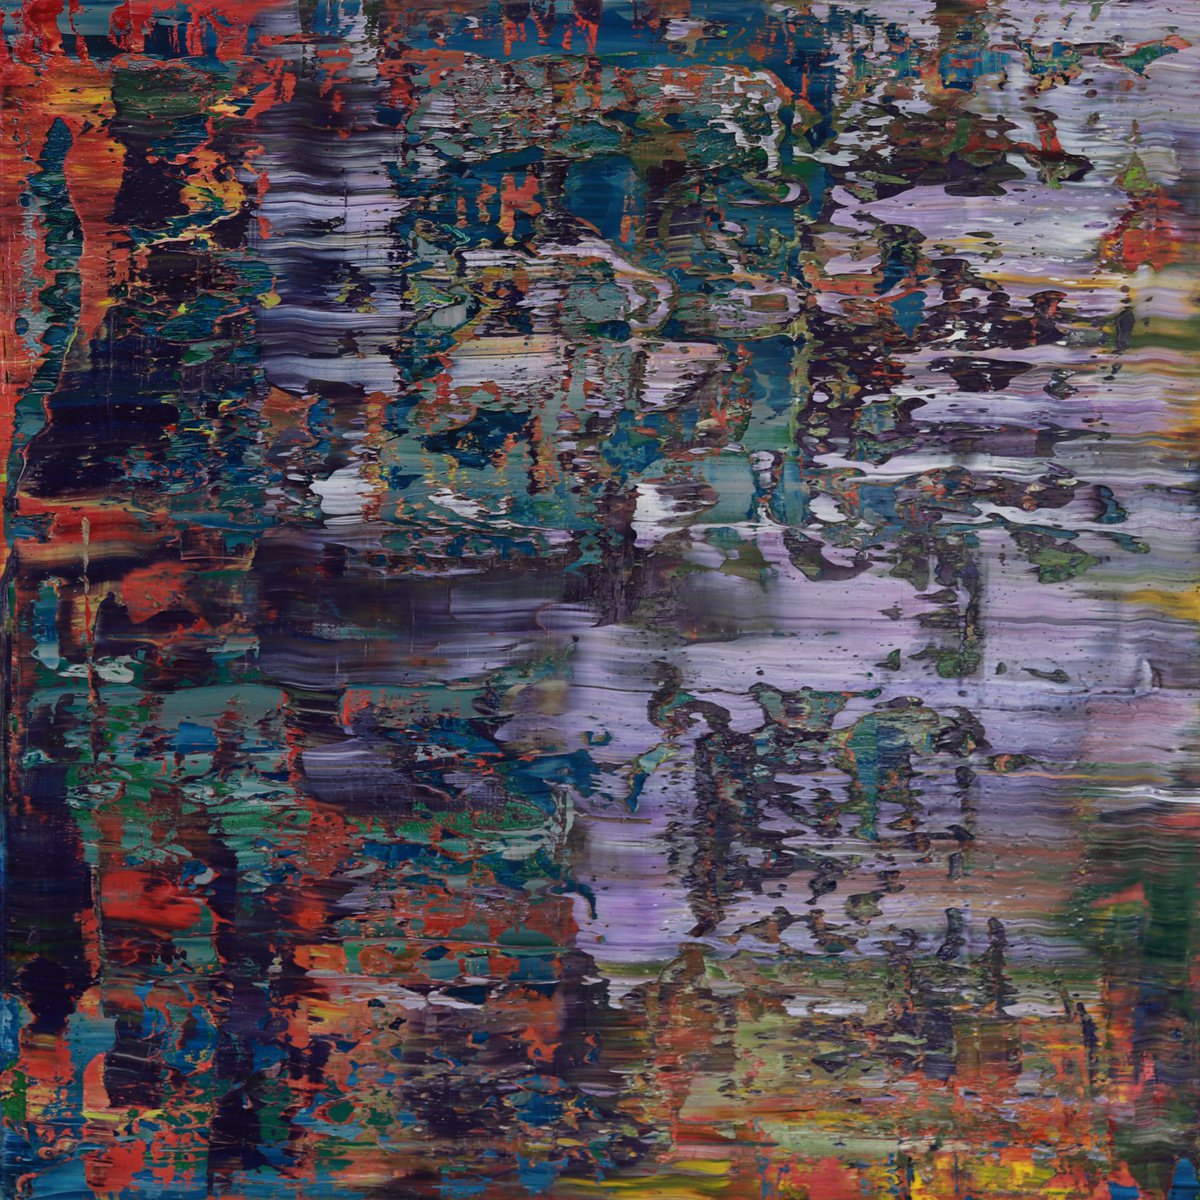 Tabula rasa [Abstract Ndeg2354] by Koen Lybaert